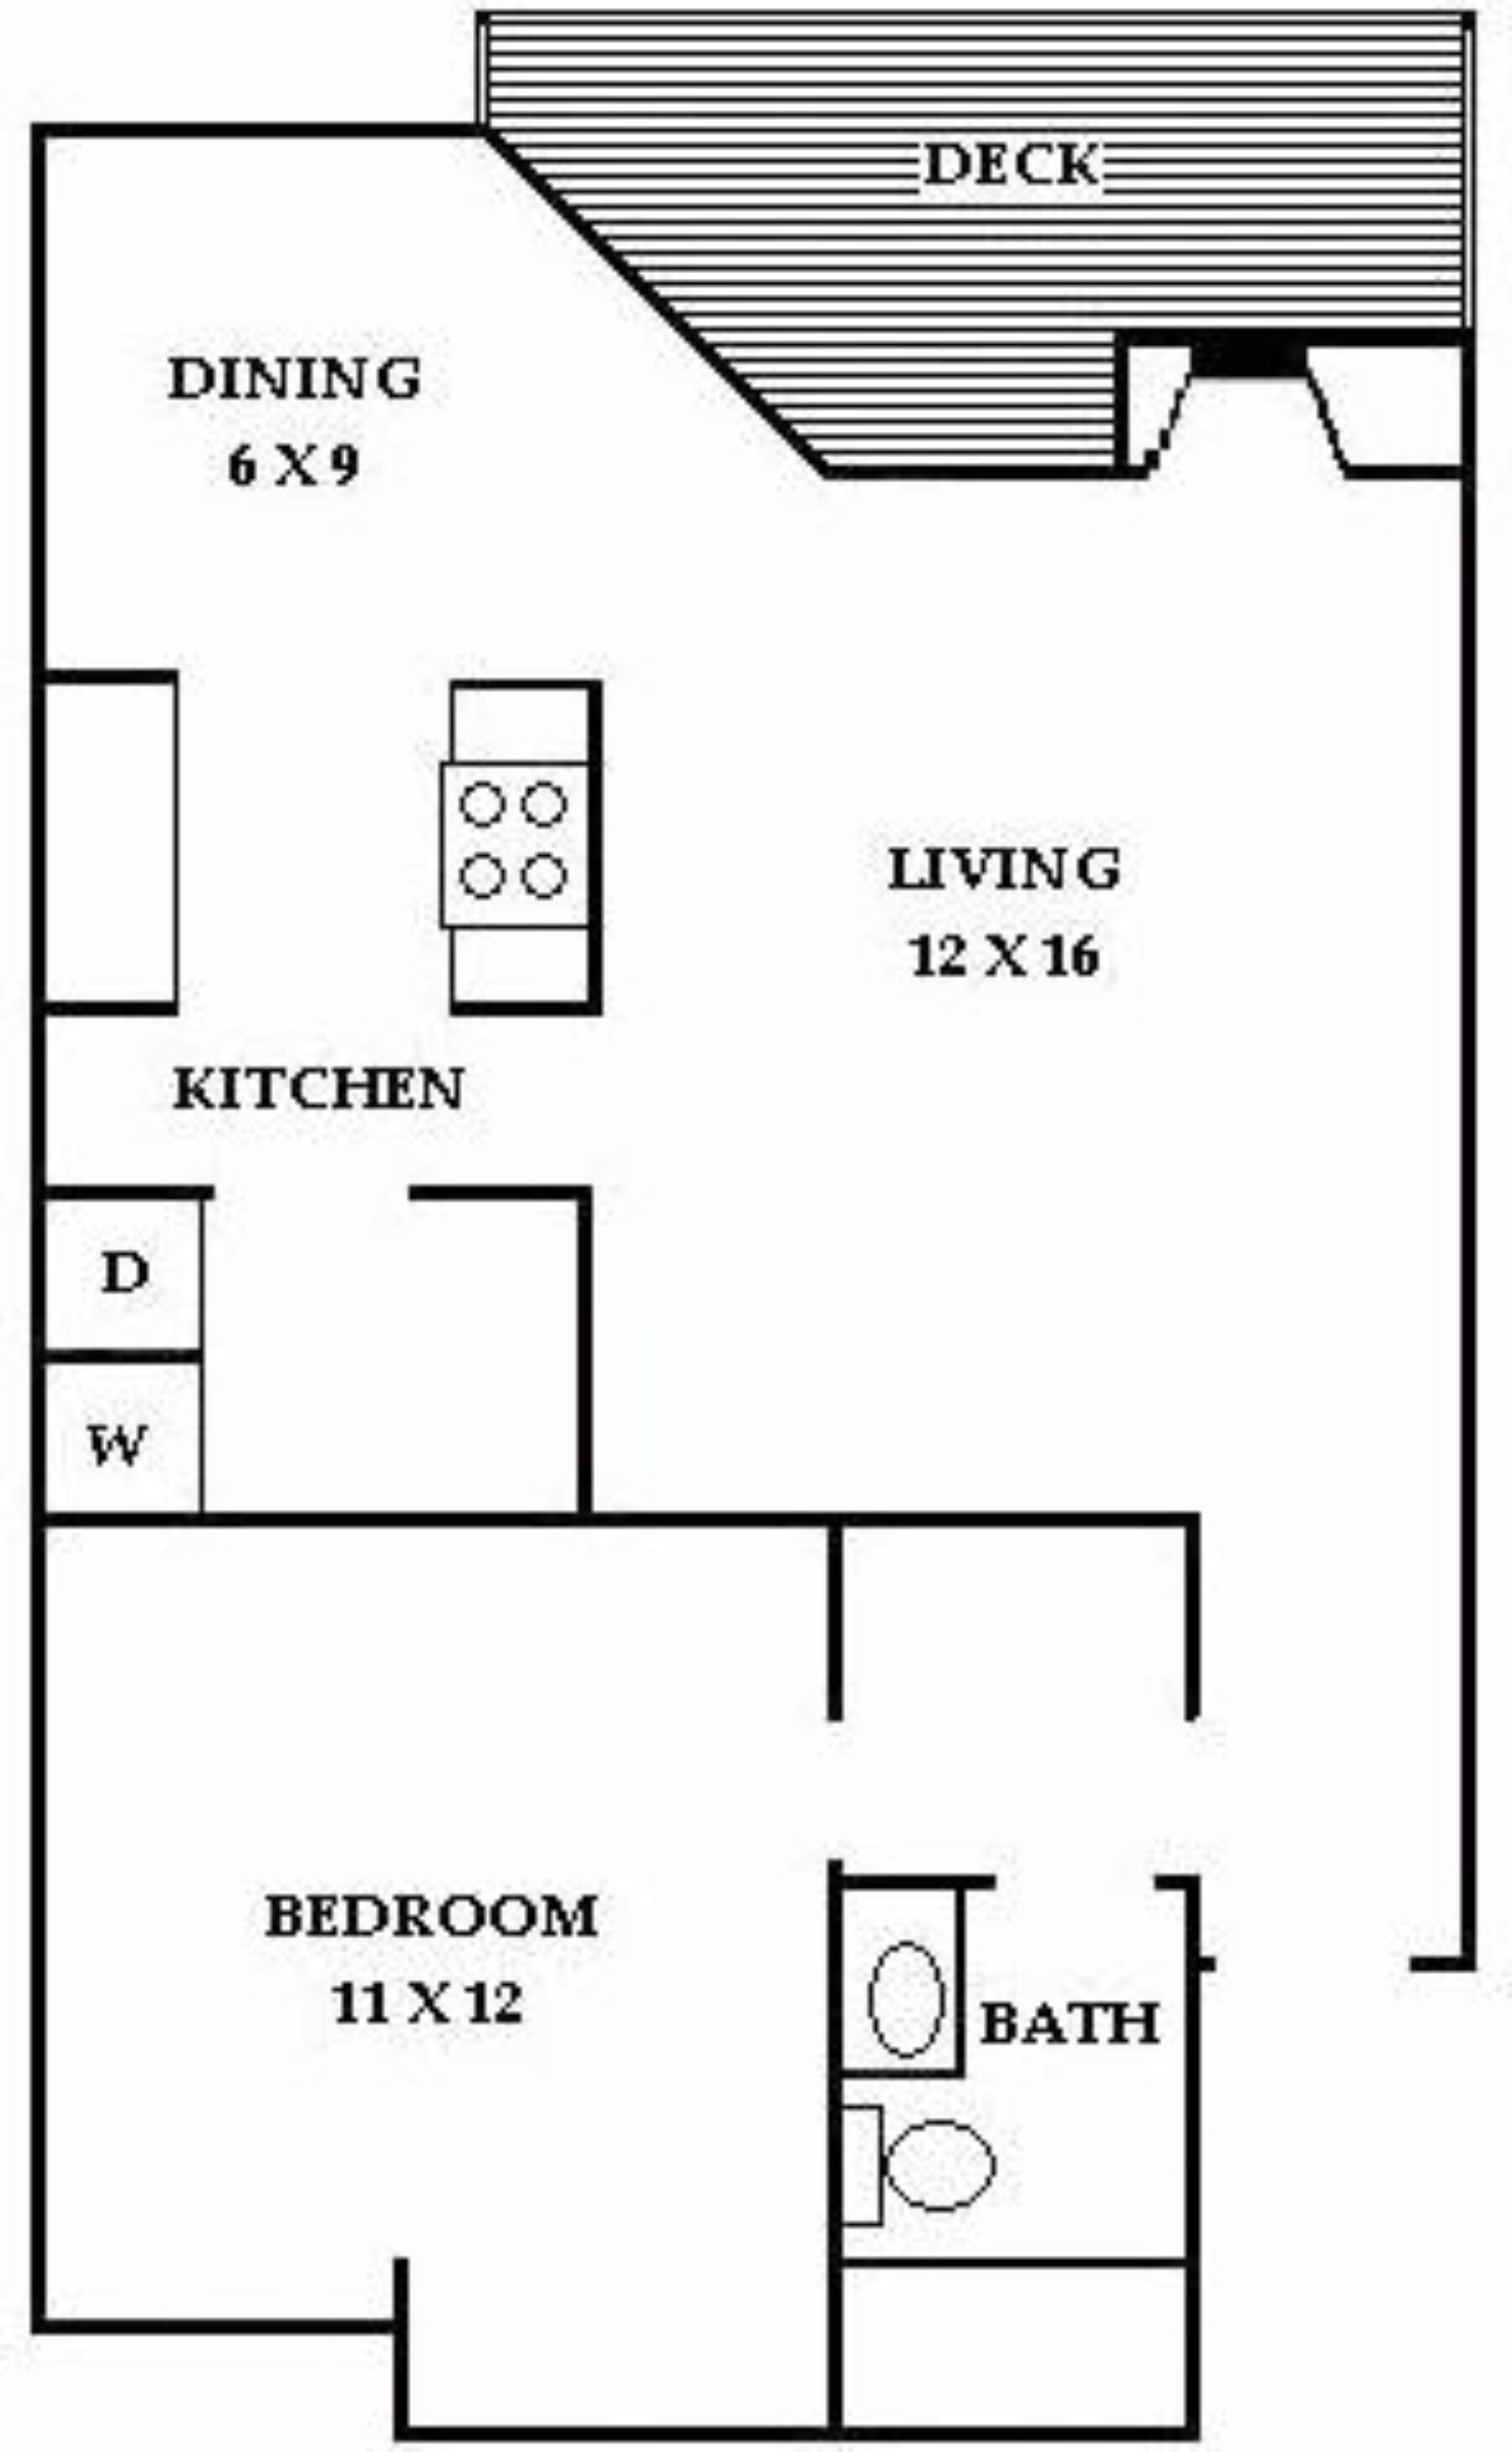 Plan Image: 1 Bedroom, 1 Bath